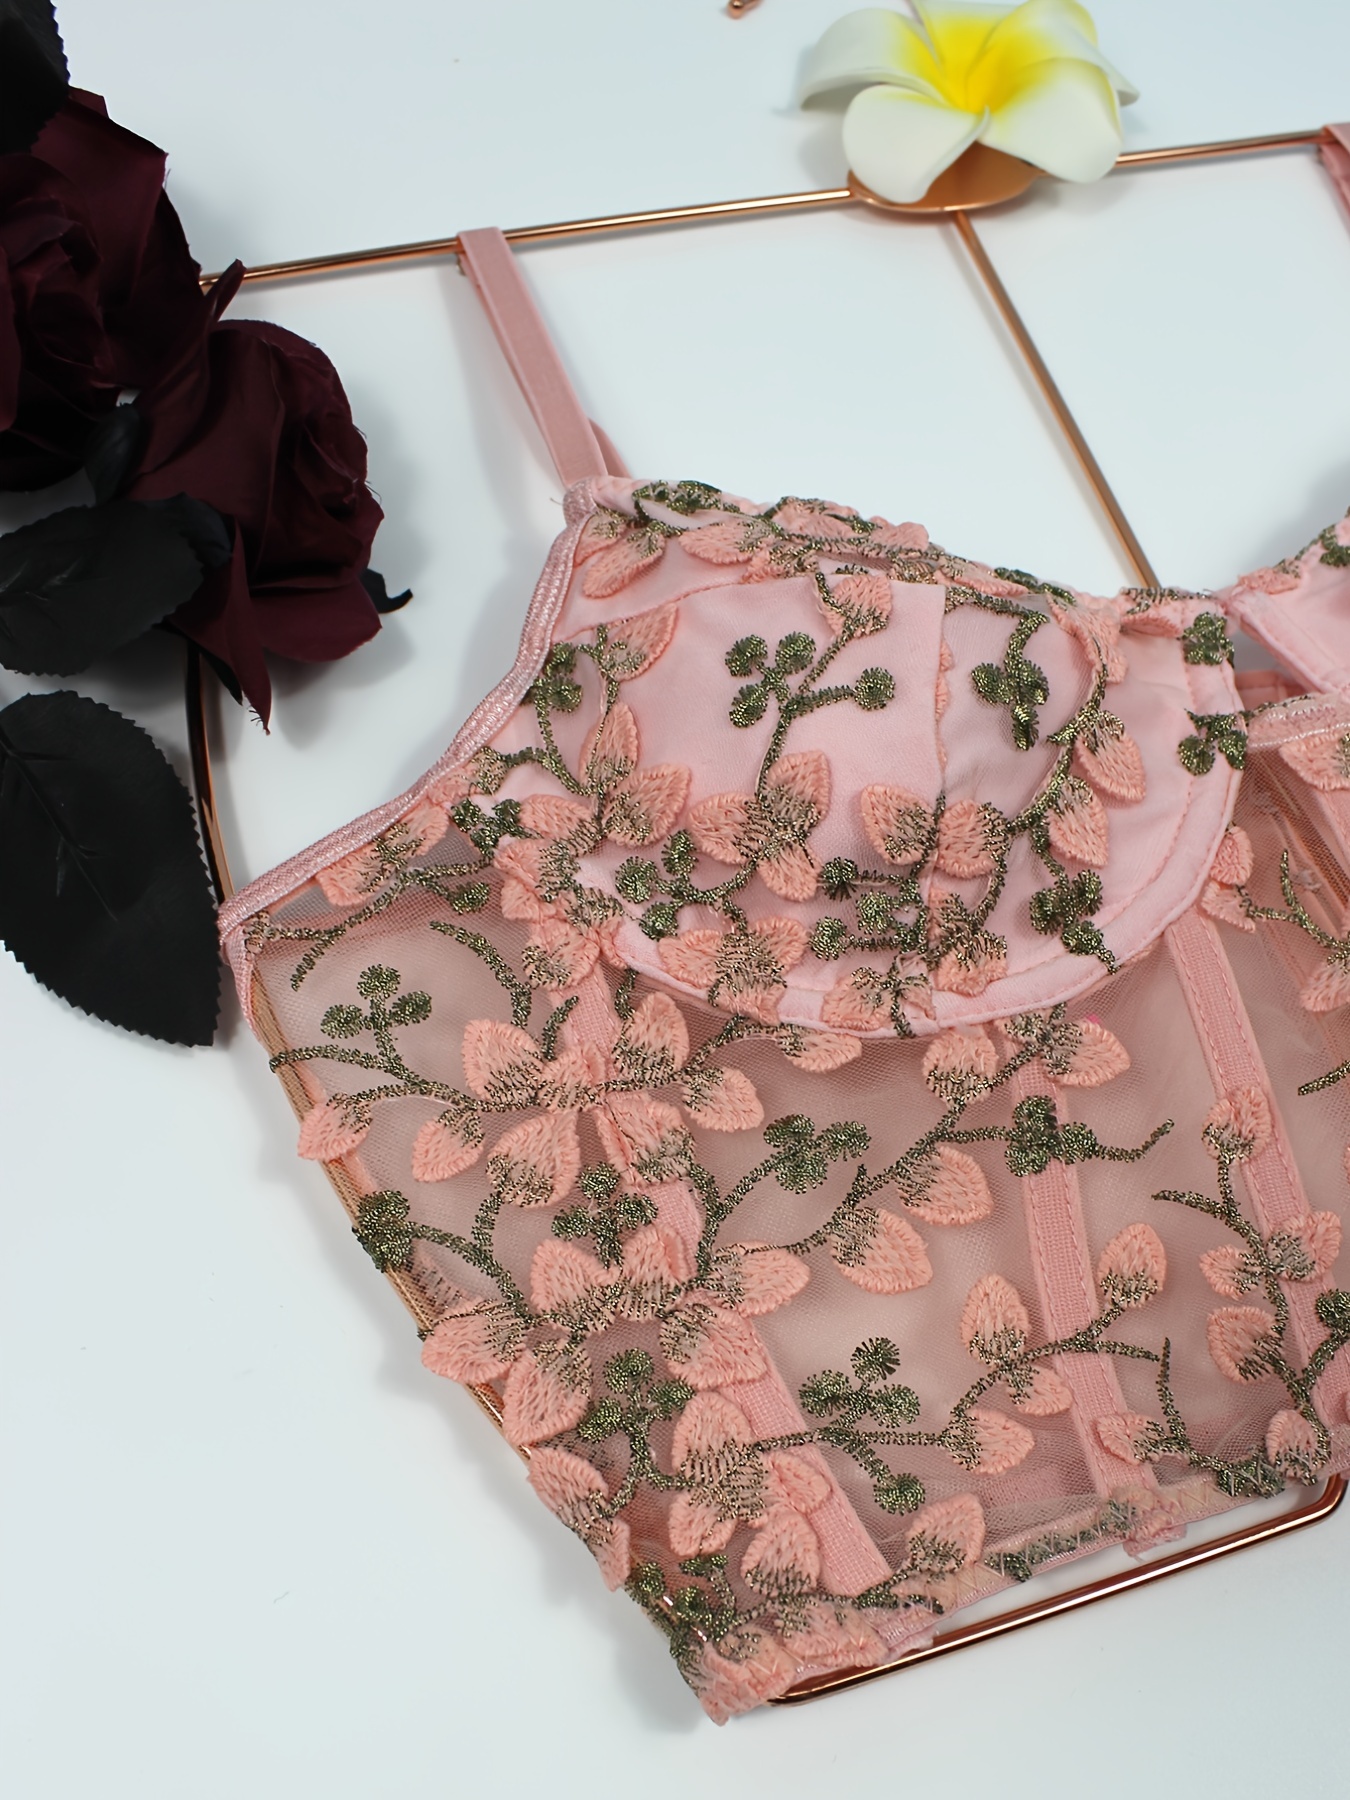 Betiyuaoe Tank Tops for Women Lingerie Corset Lace Floral Bralette Bralet Bra  Crop Underwear Camis Top 